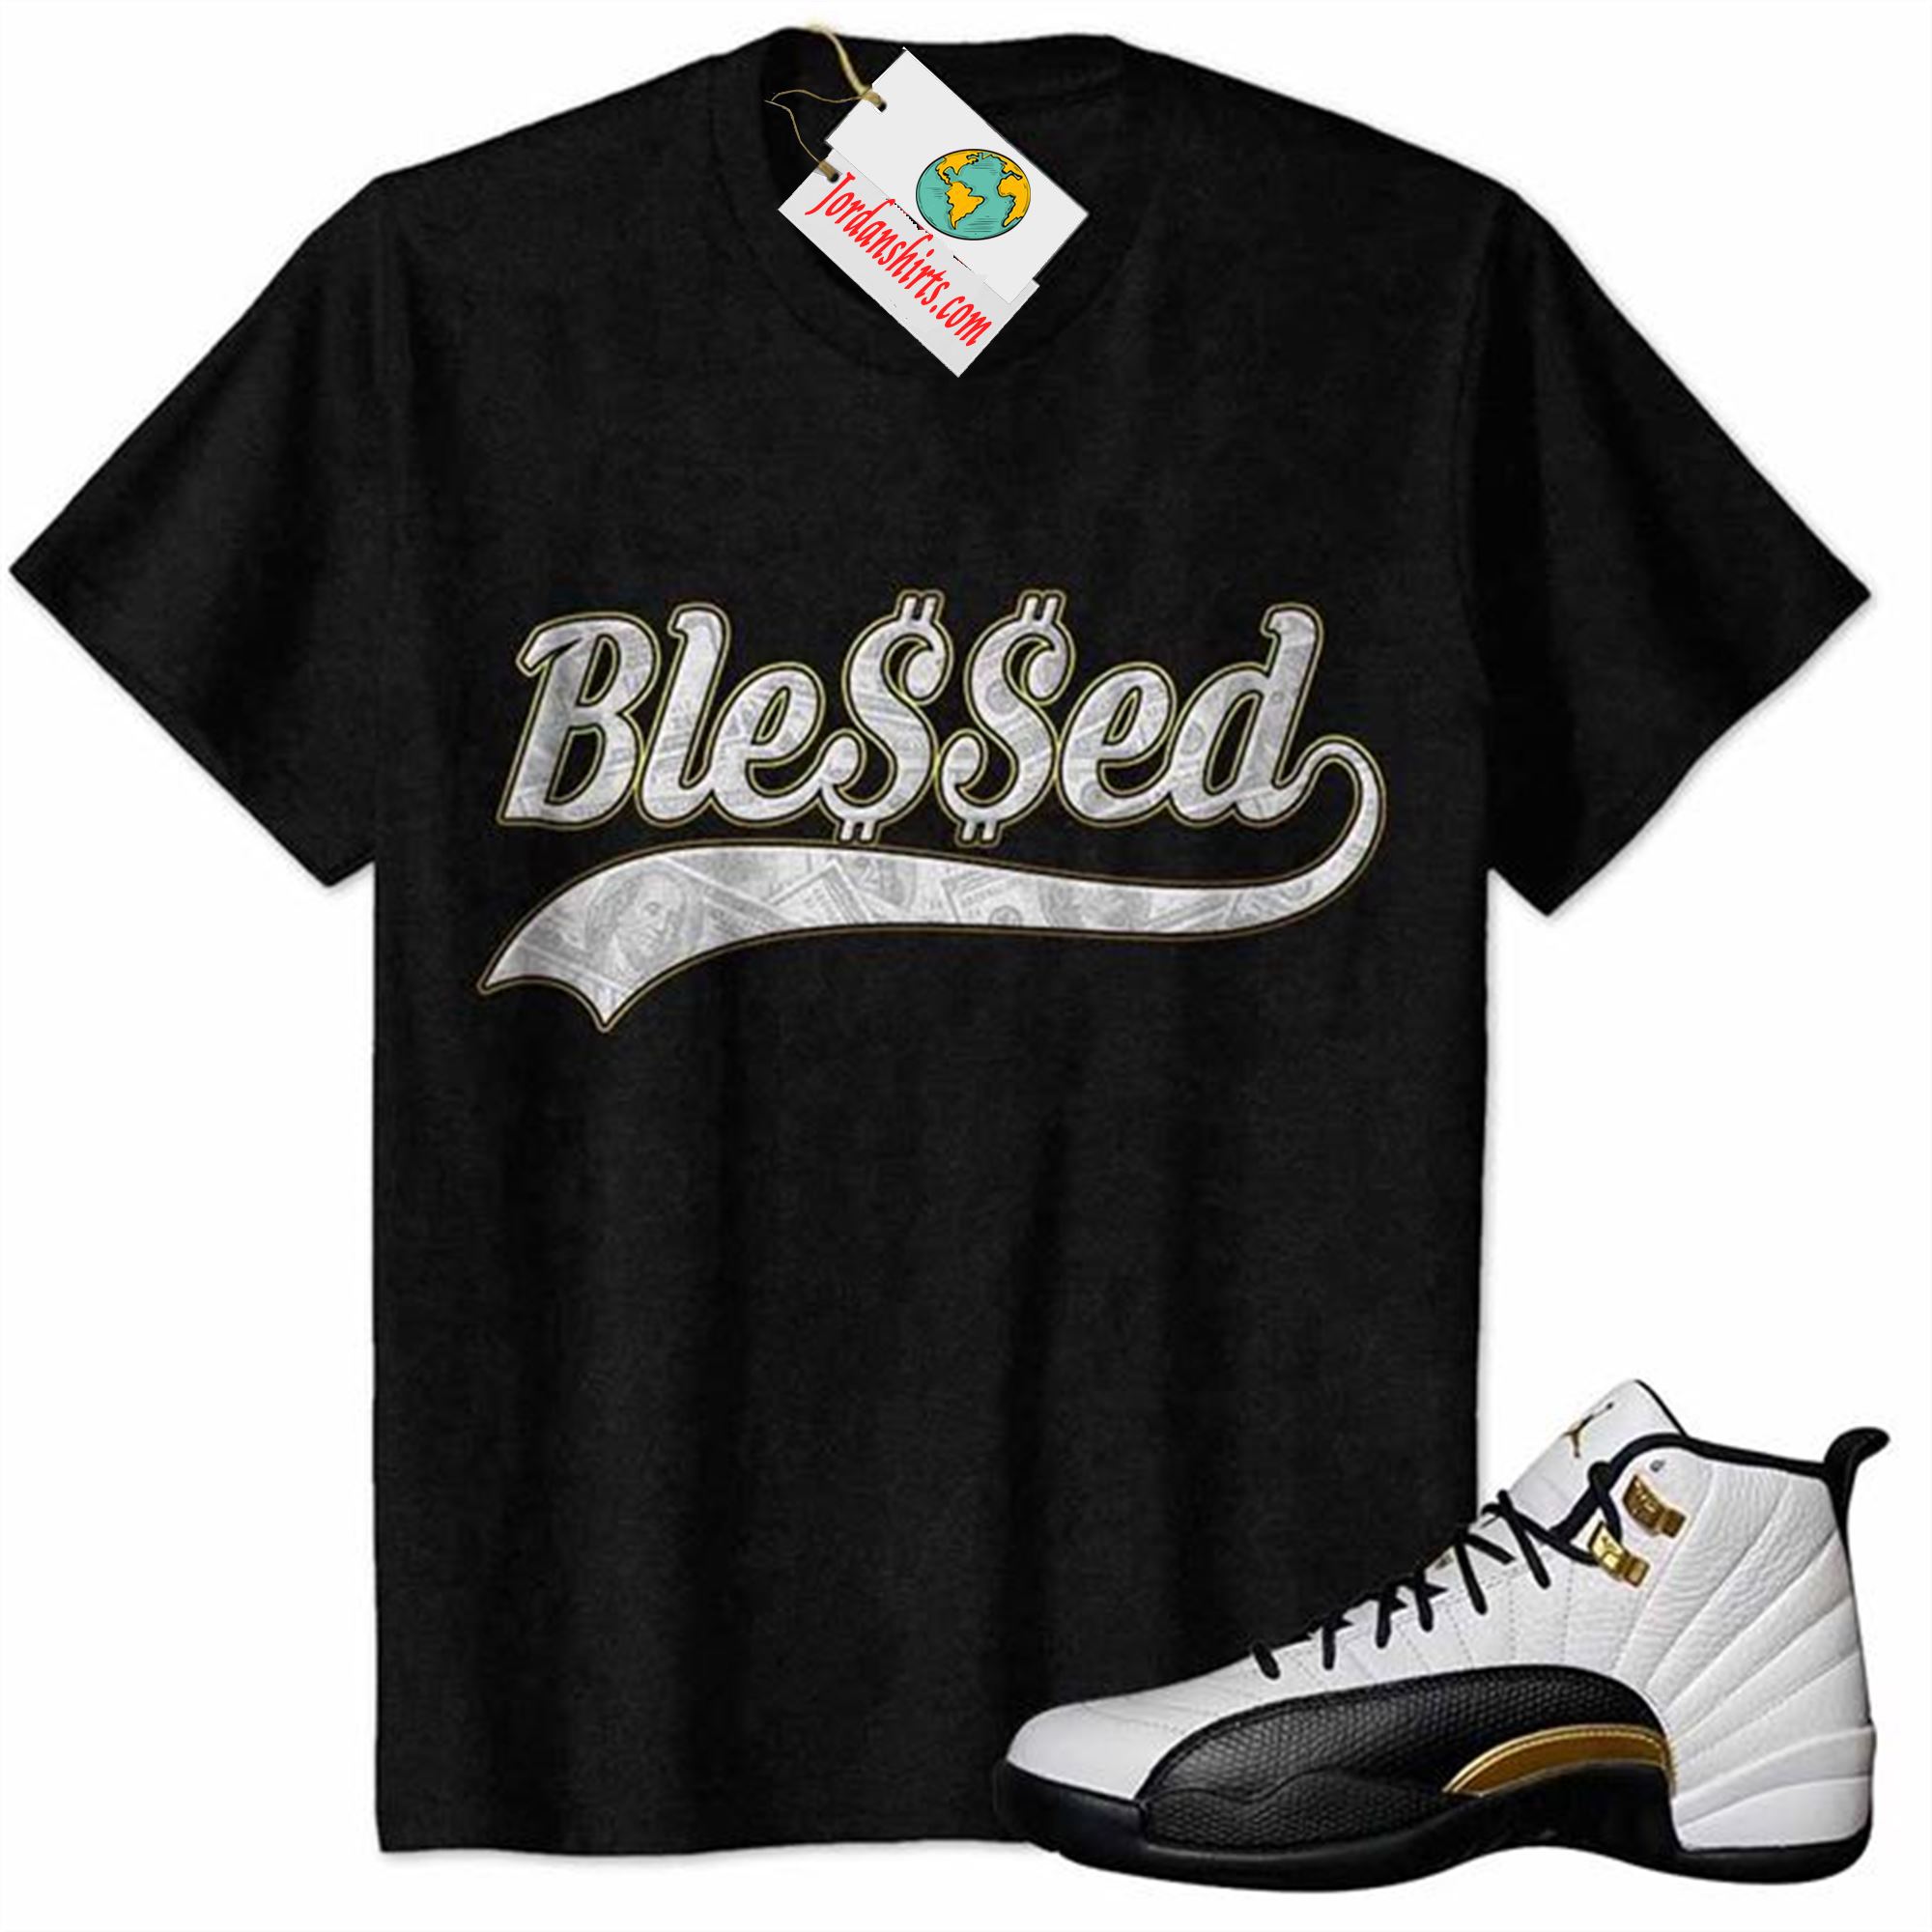 Jordan 12 Shirt, Blessed Usd Benjamin Franklin Black Air Jordan 12 Royalty 12s Size Up To 5xl